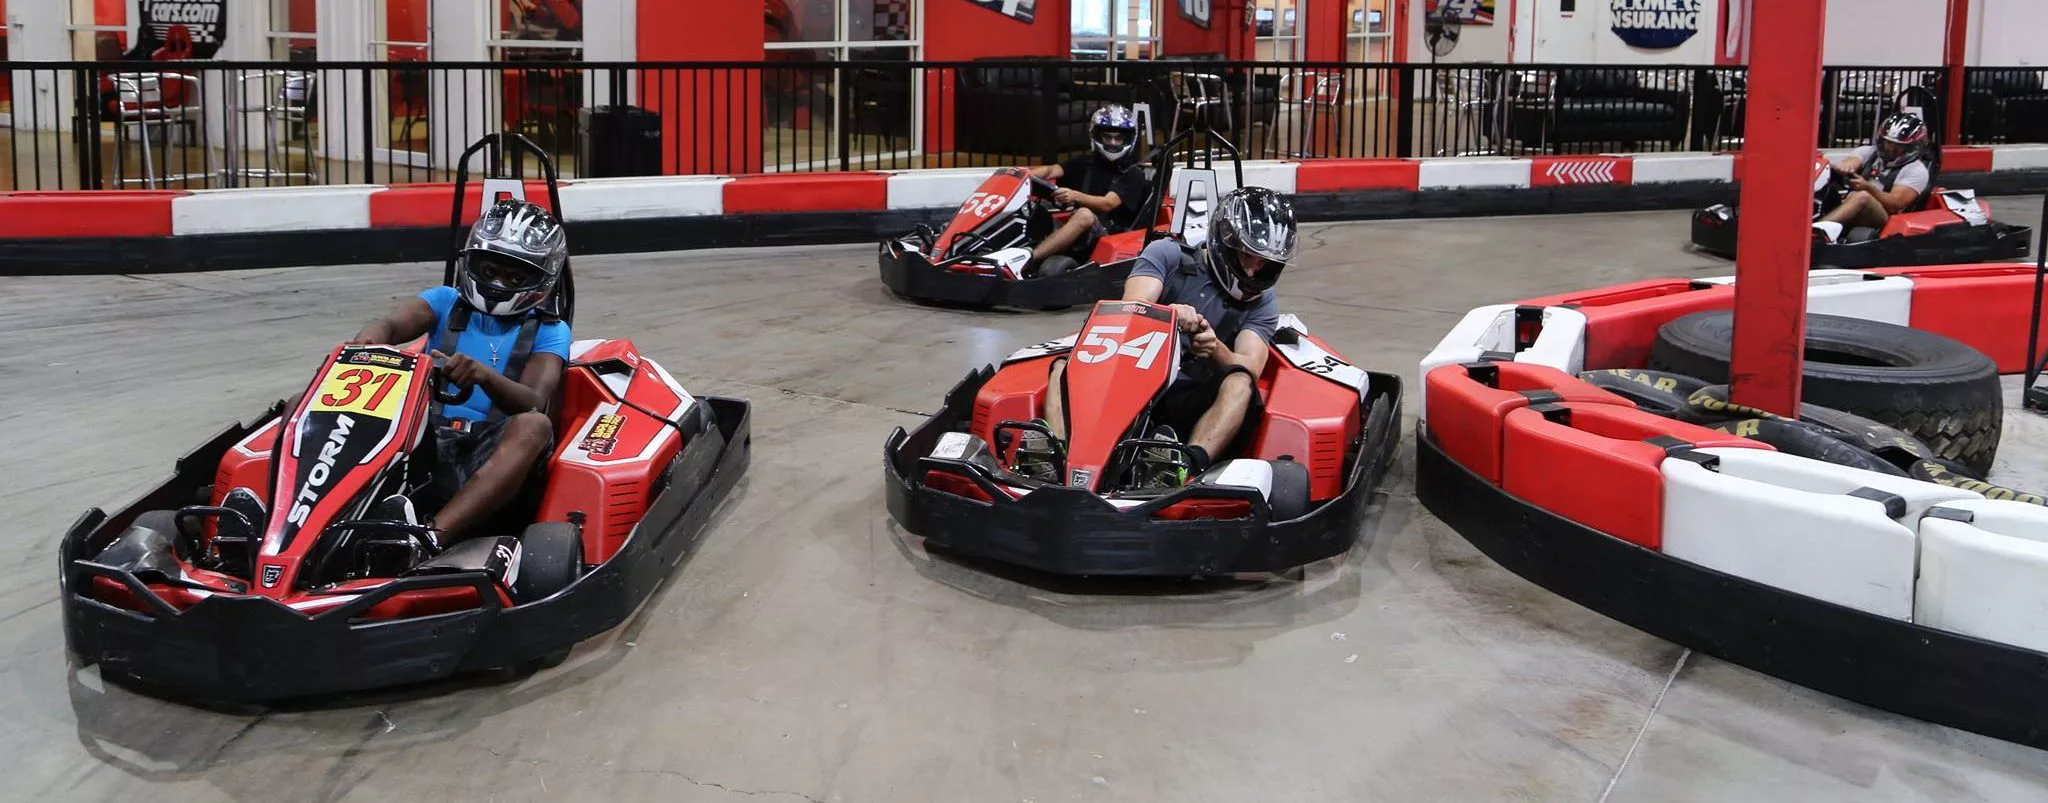 Grand Prix Karting Indoor Entertainment